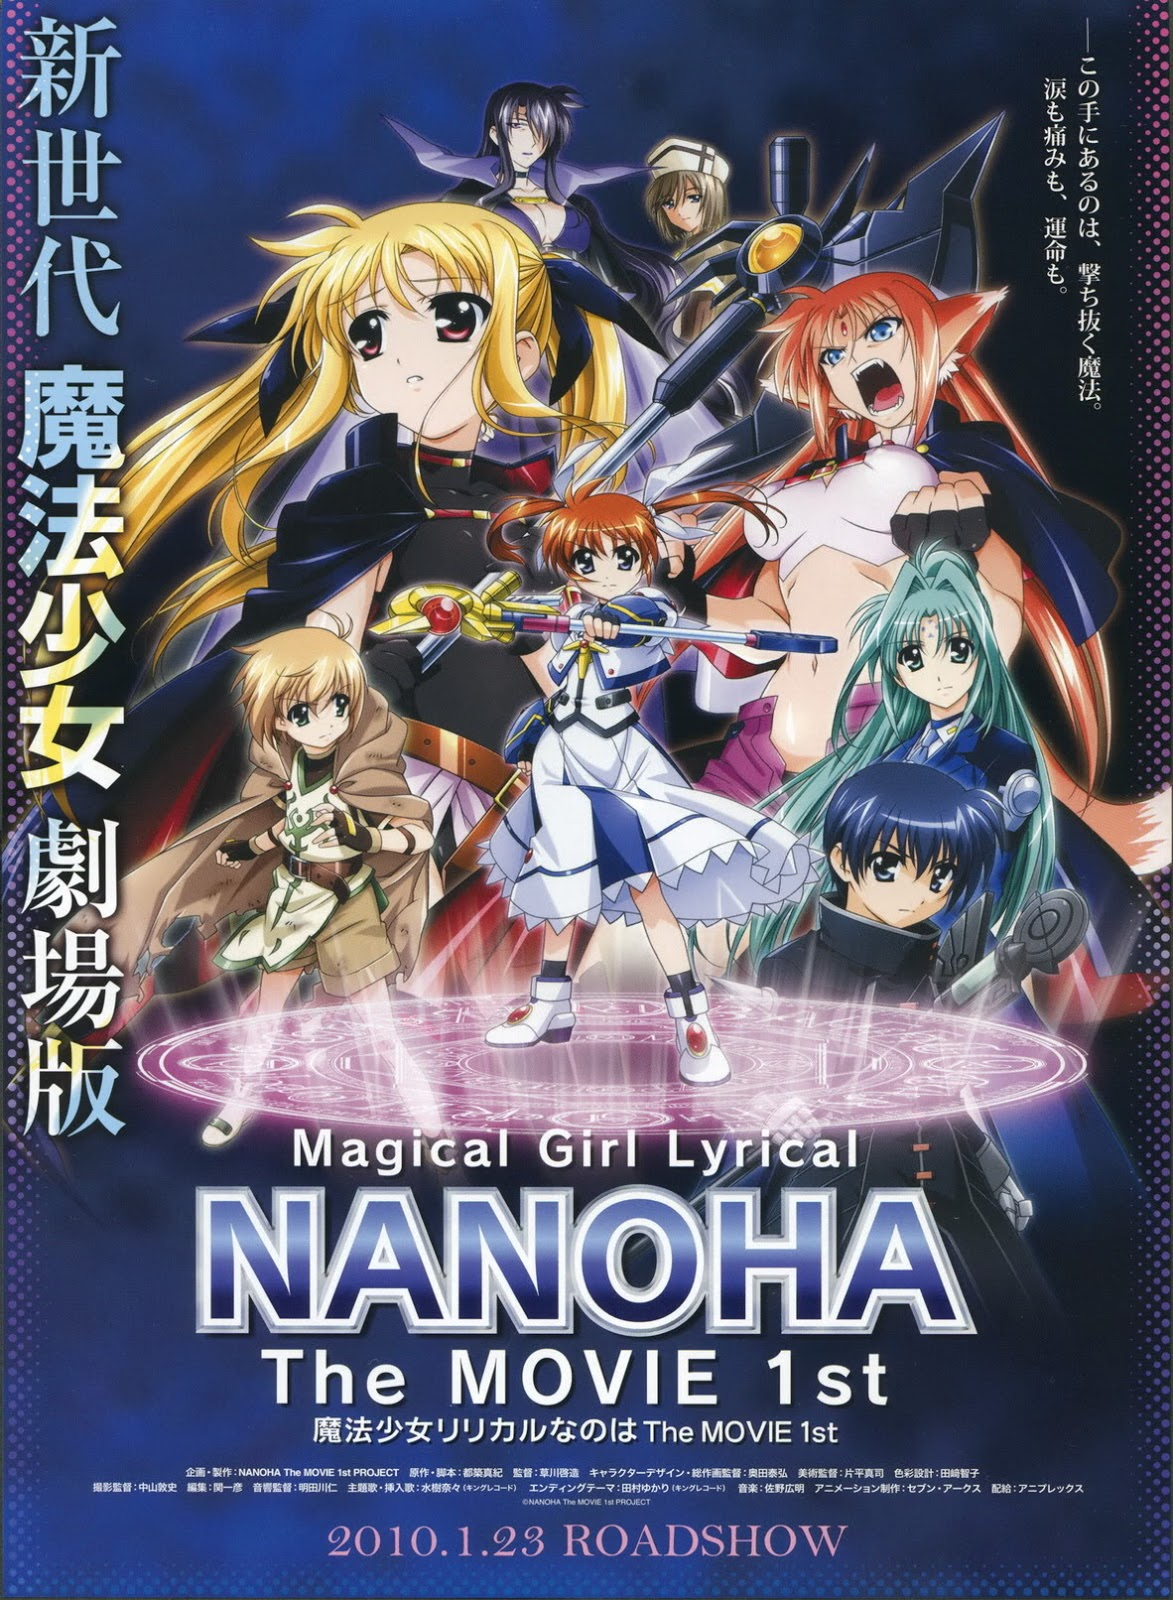 Mahou Shoujo Lyrical Nanoha  Magical Girl (Mahou Shoujo - 魔法